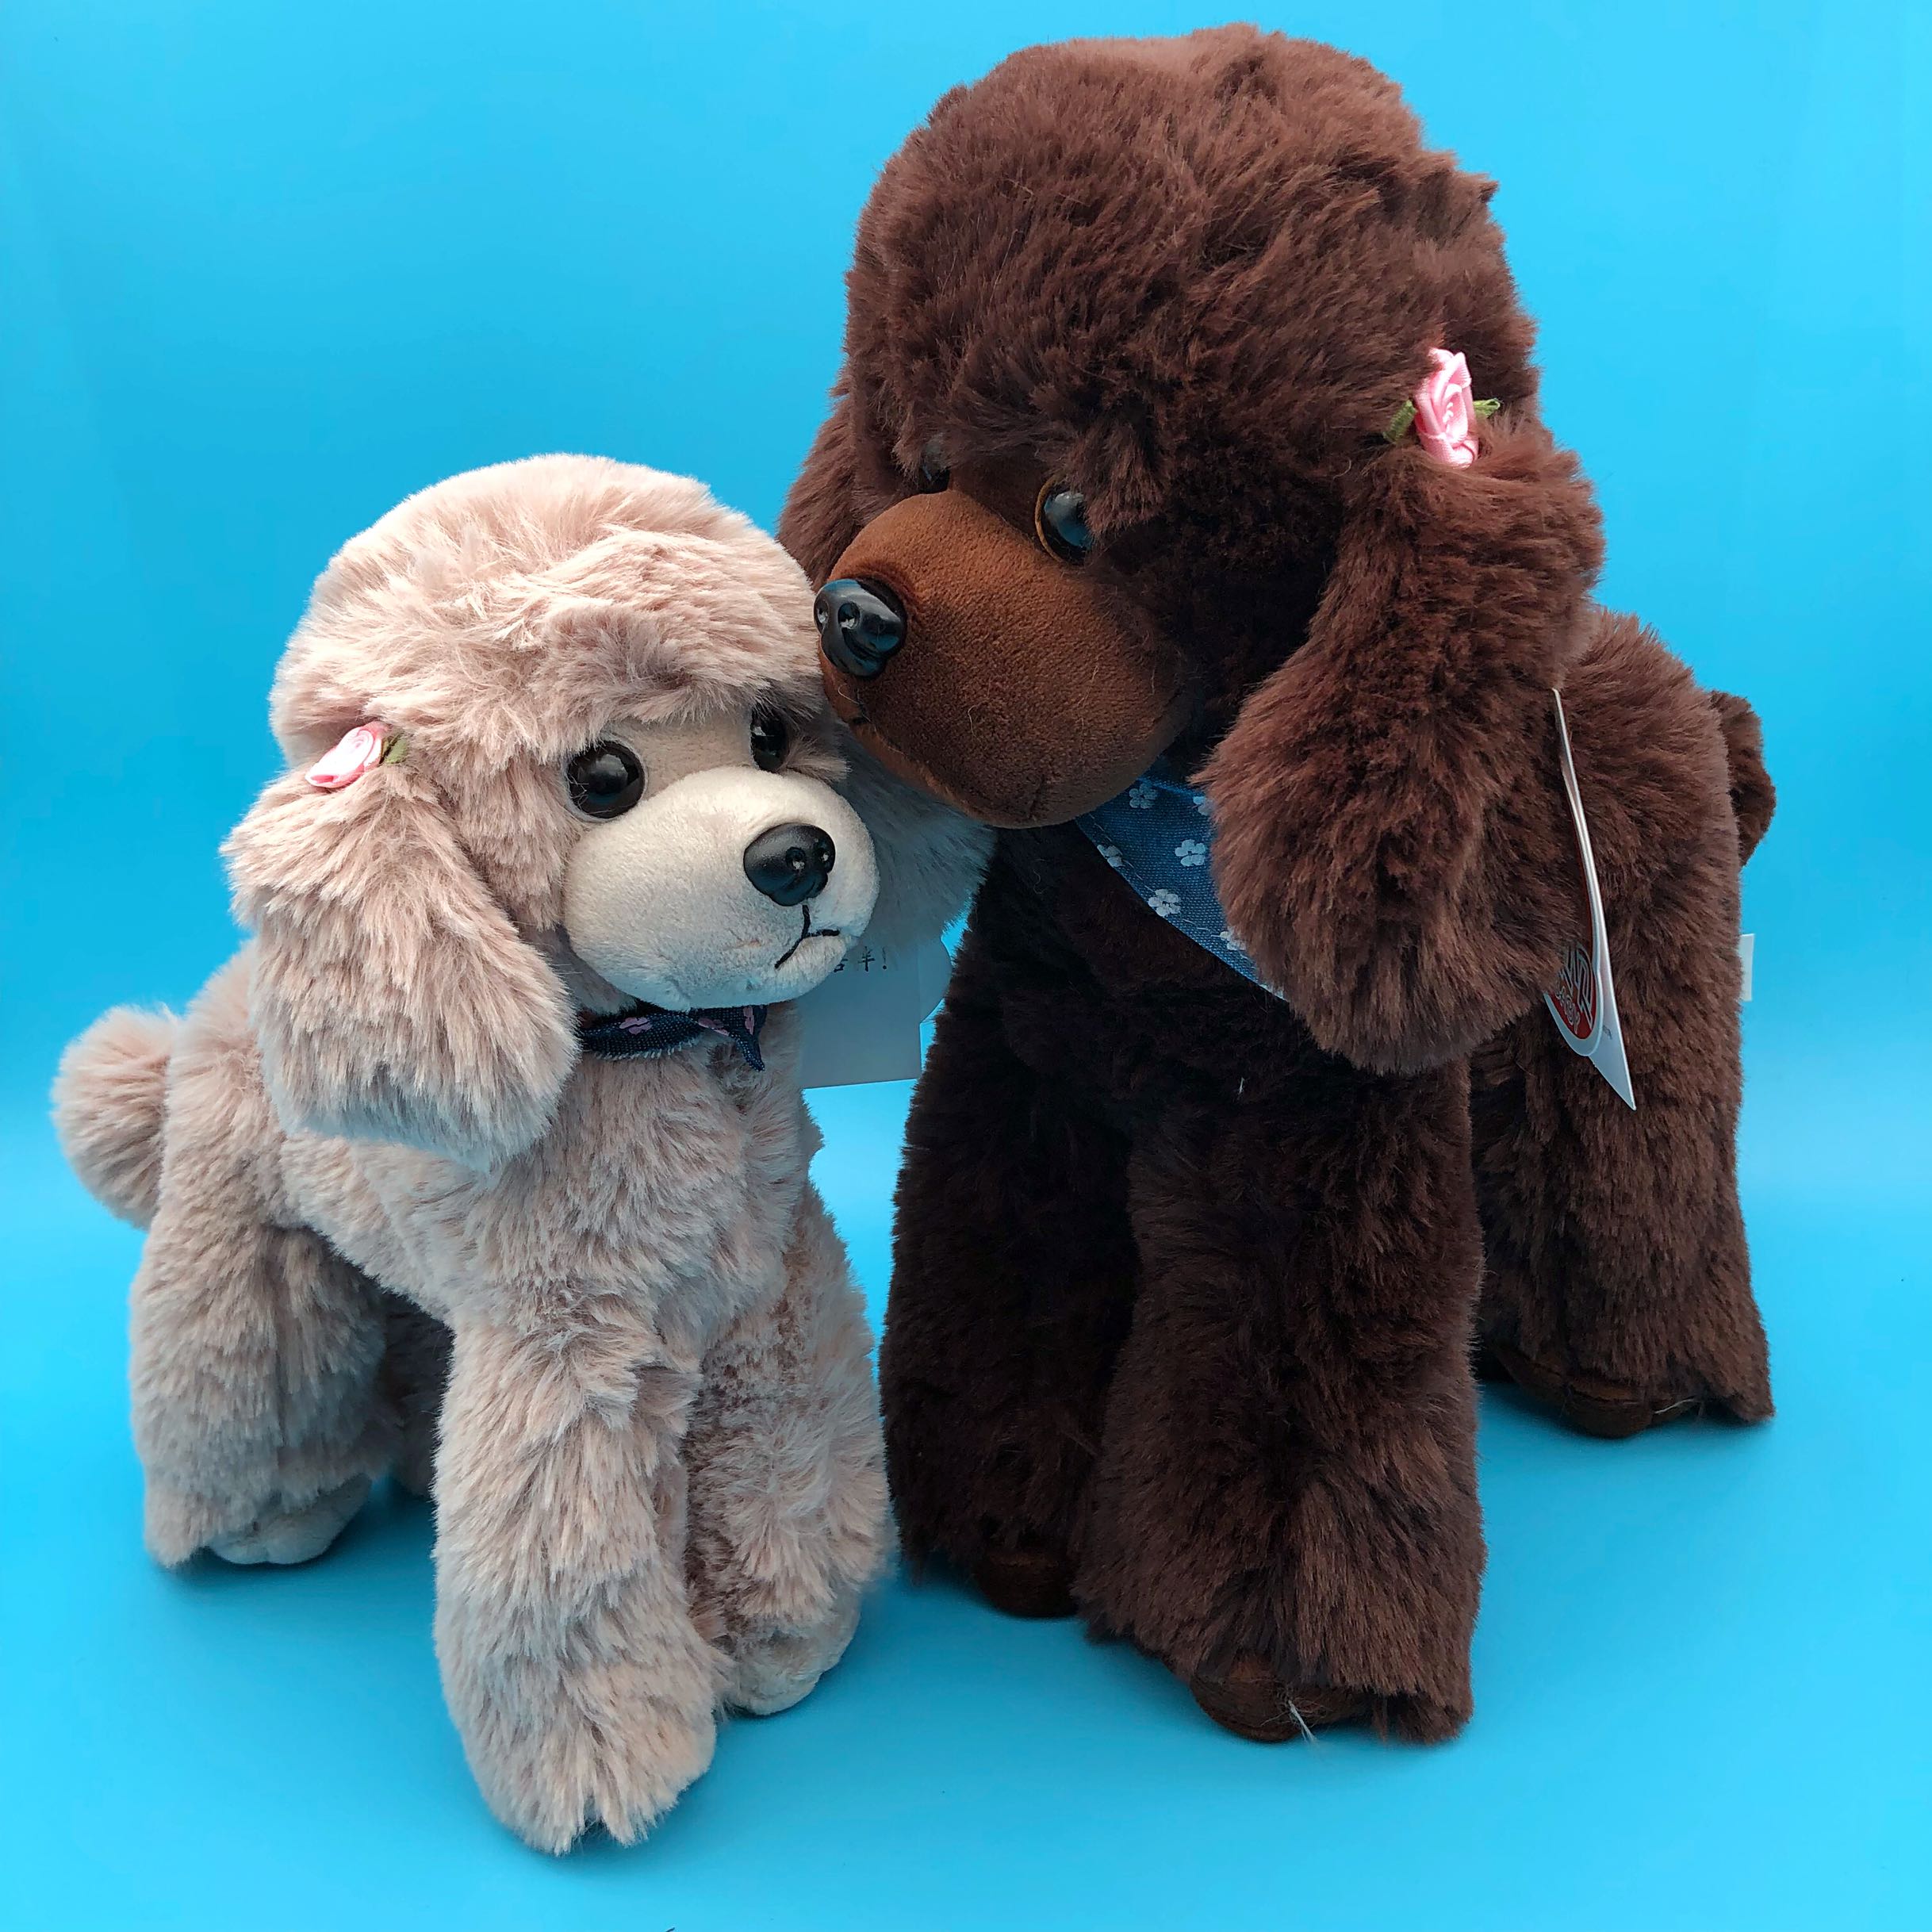 Original Poodle Plush Toy Soft Stuffing Doll Cute Imitation Poodle Teddy Bear Kids Gift